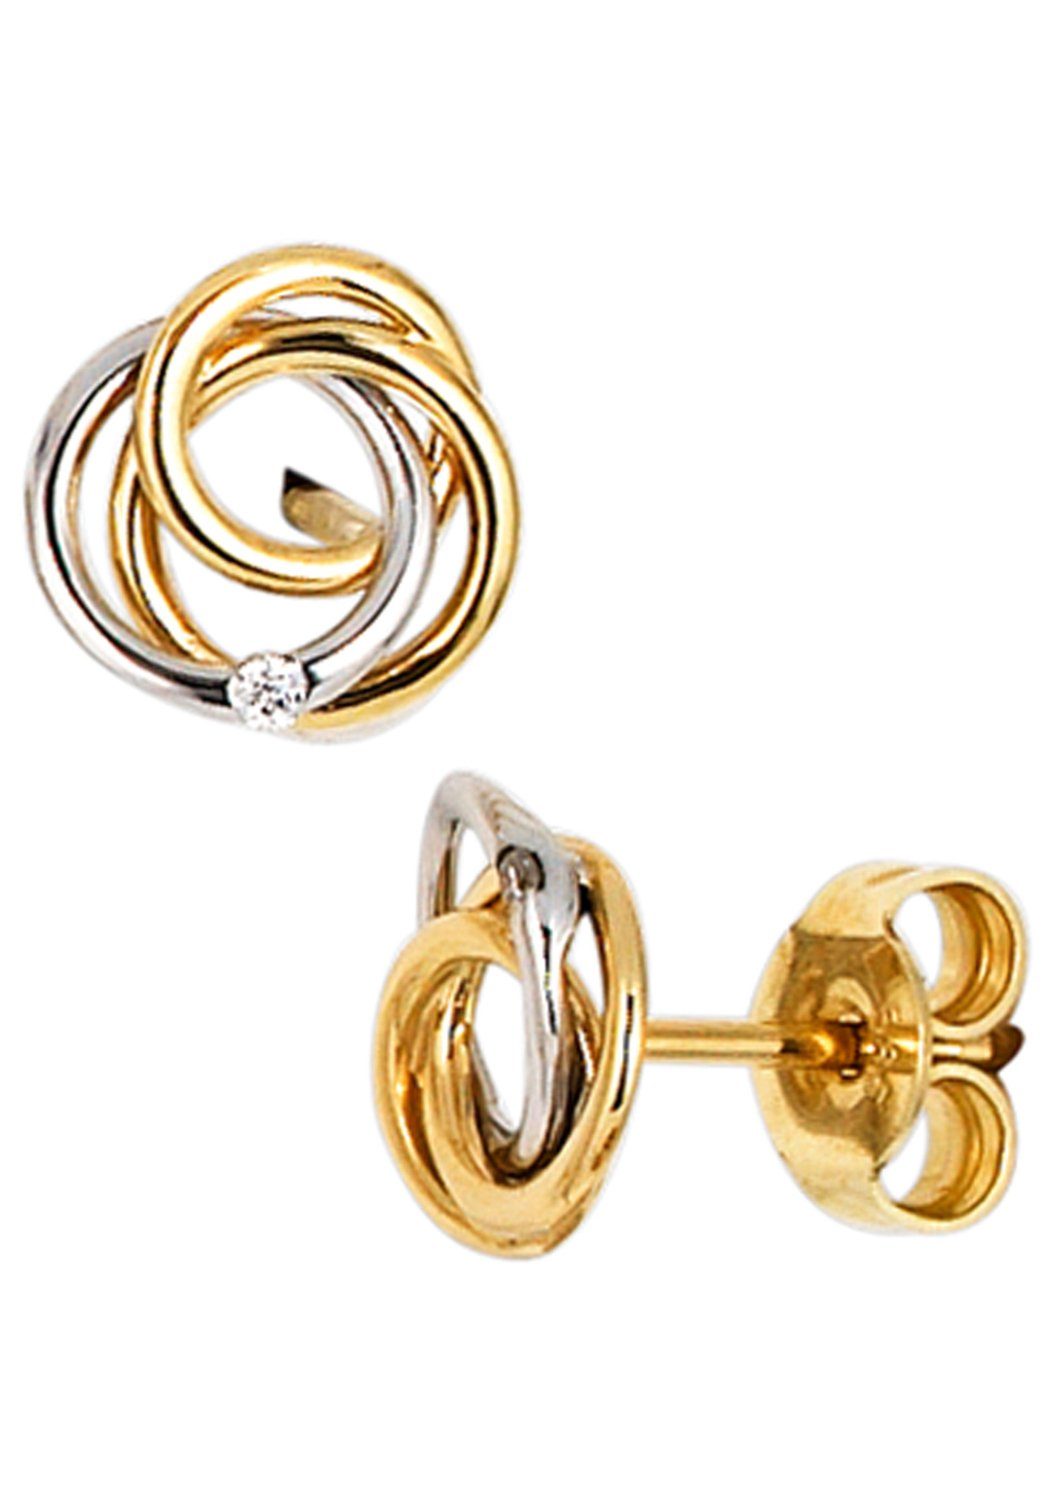 Knoten verschlungener 2 JOBO 585 in Hochwertige Diamanten, Gold mit Paar bicolor Ohrringe Ohrstecker, Form